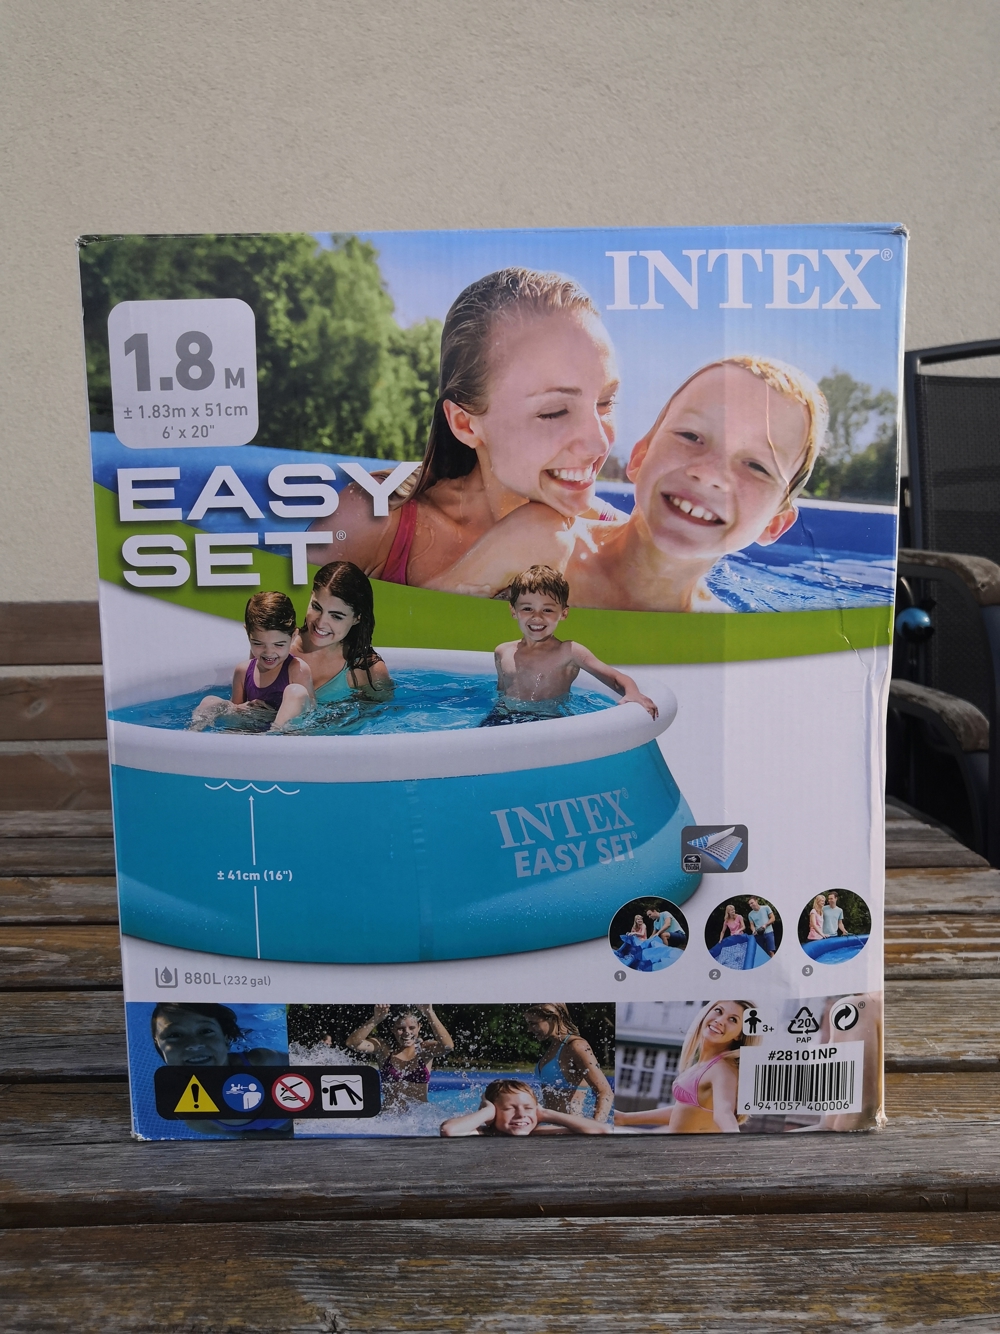 Intex Easy Set Swimming Pool